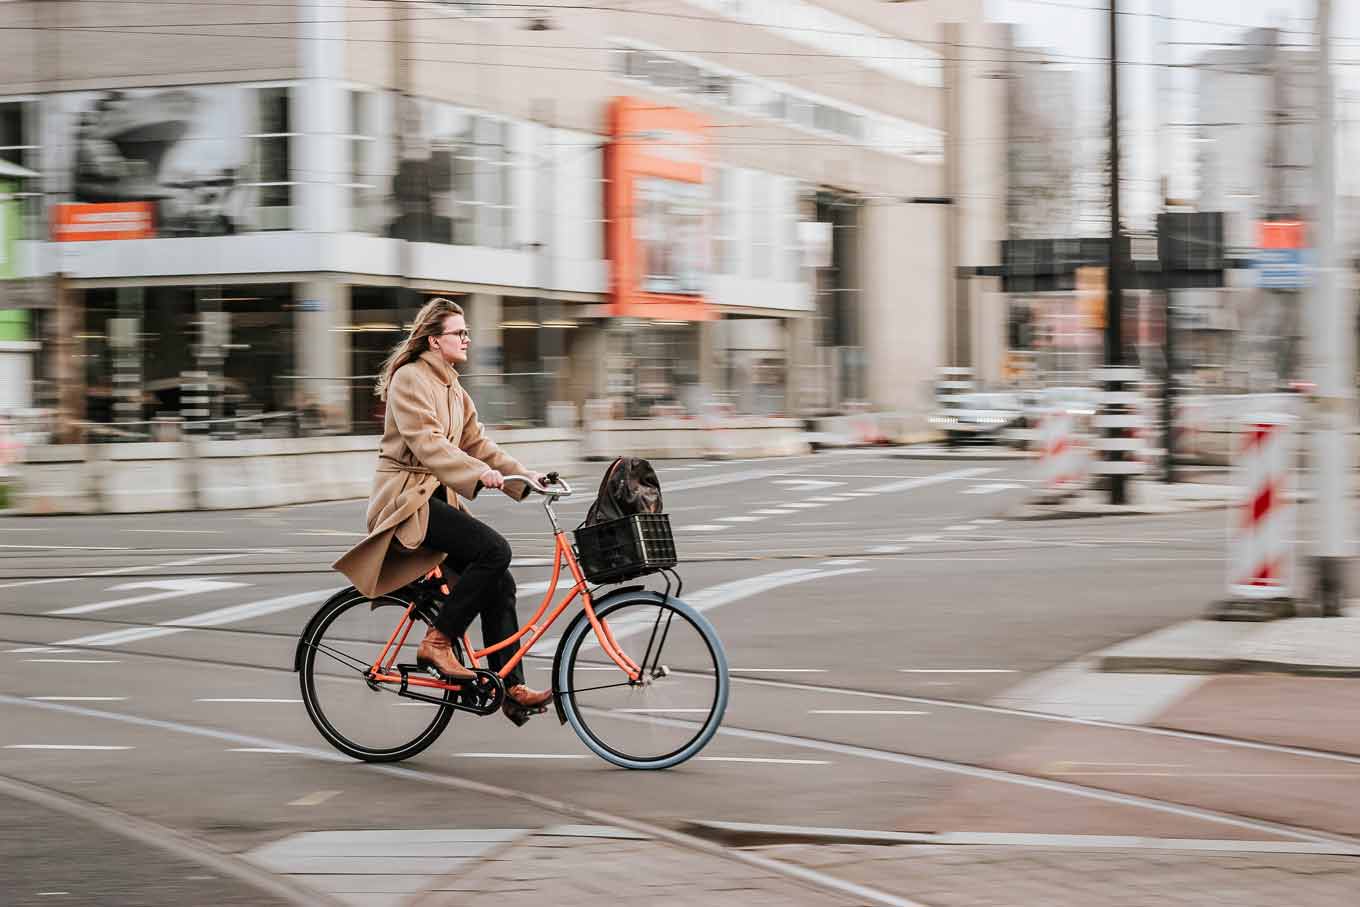 A woman on a bike riding across a street